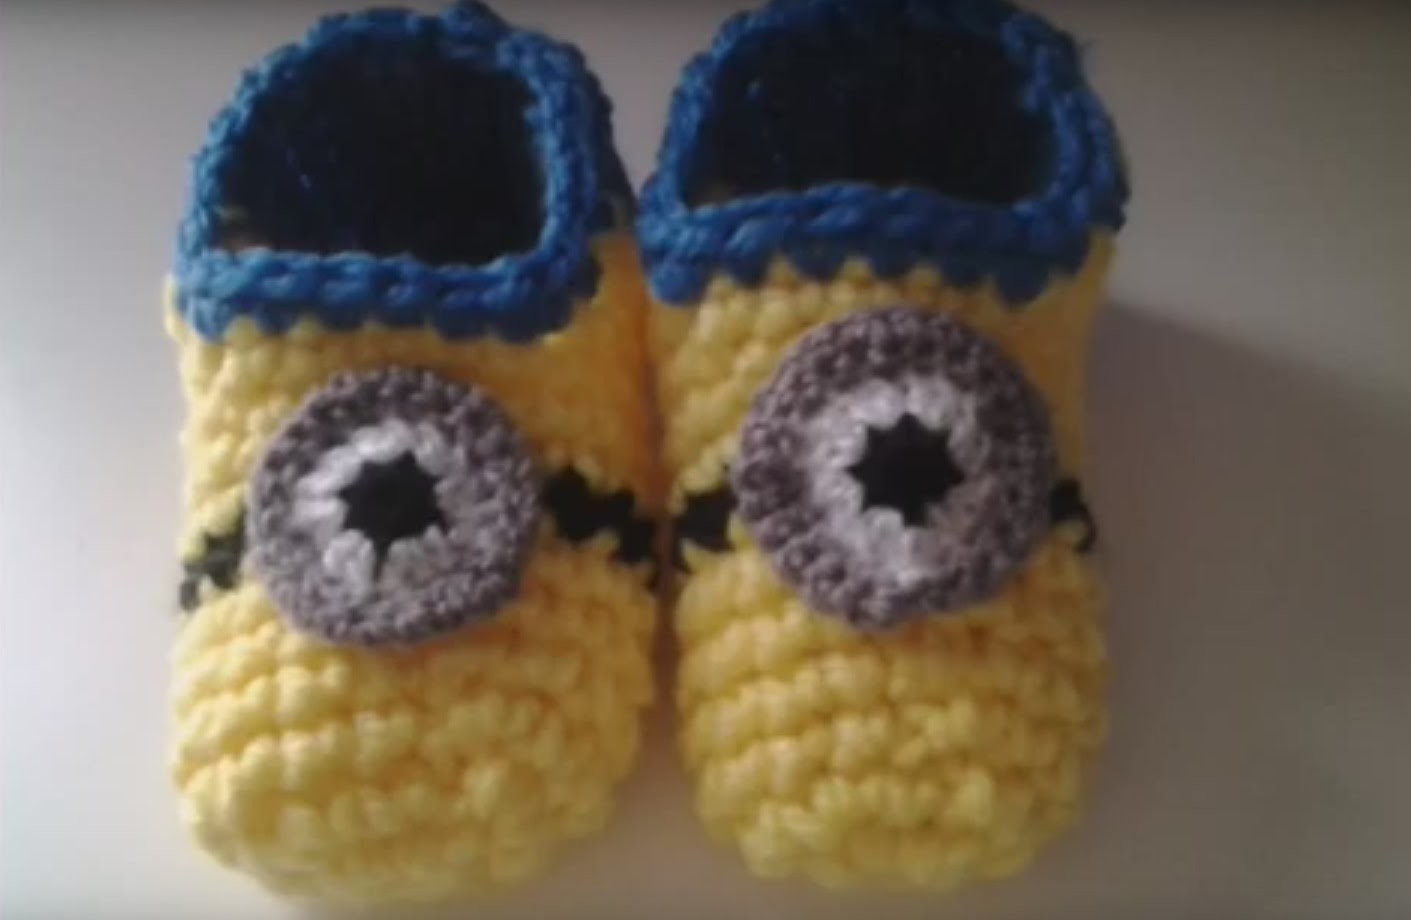 Zapatillas minion crochet (ganchillo) #tutorial DIY